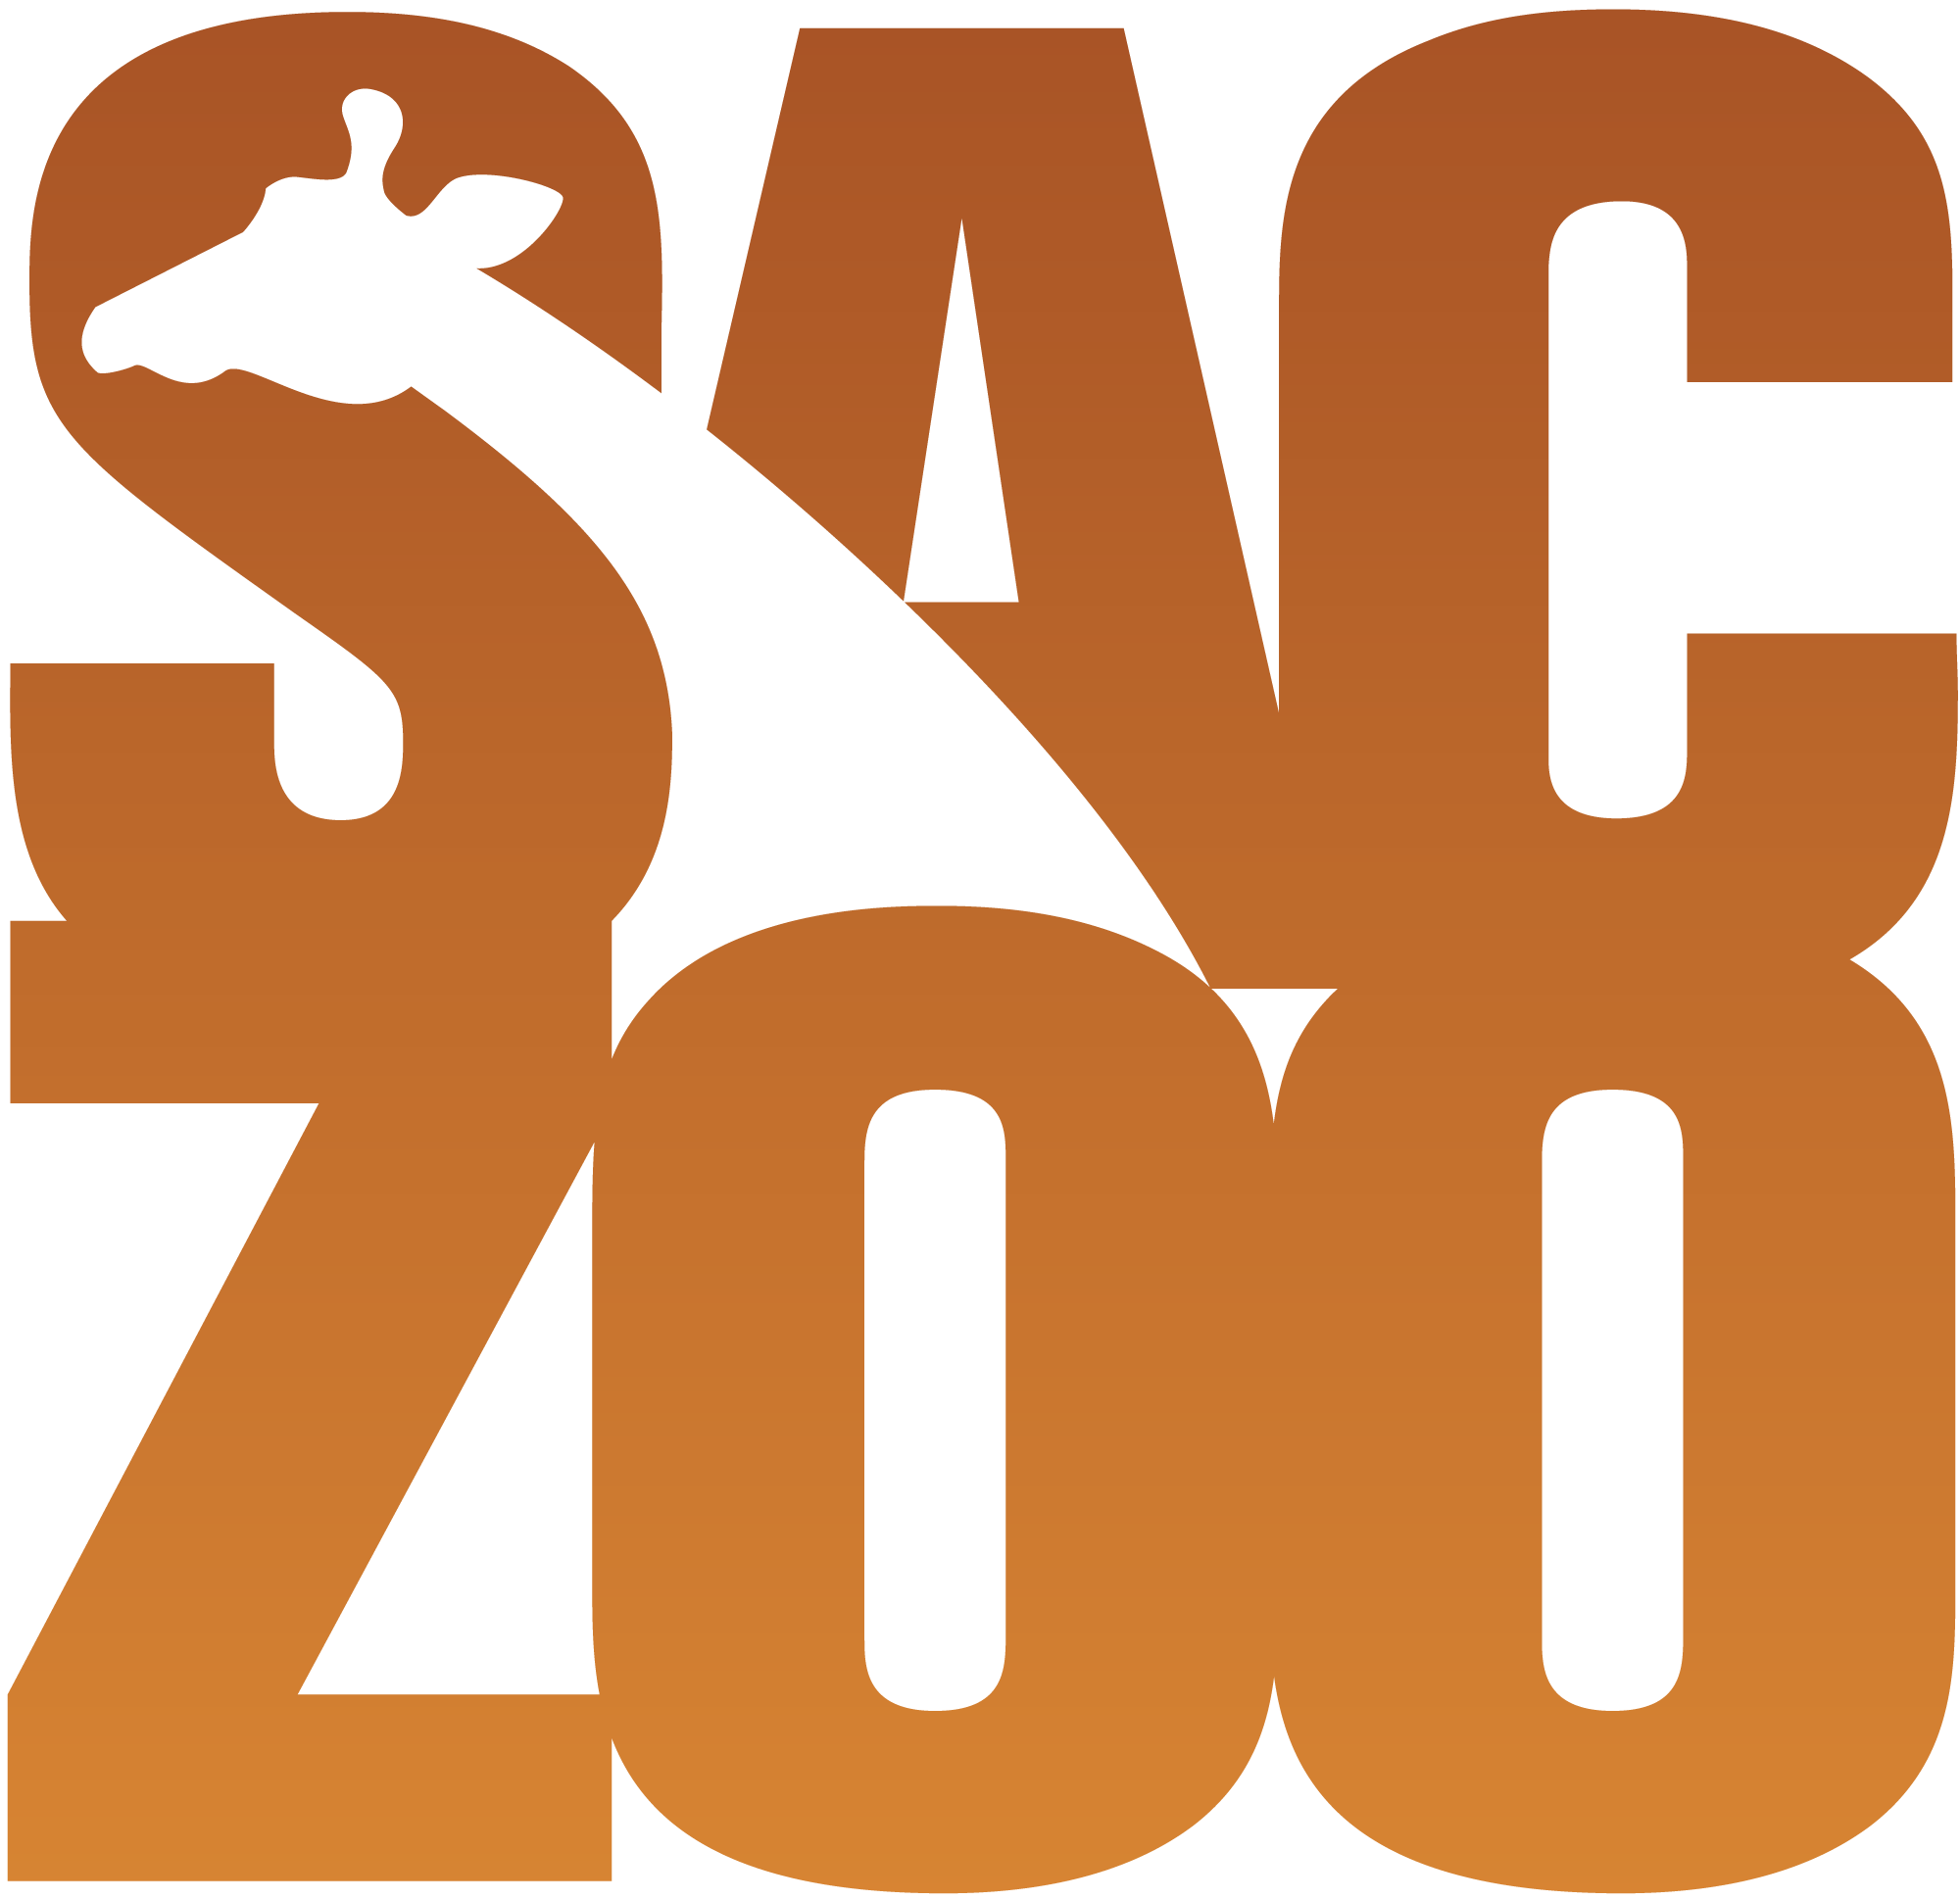 Sac Zoo